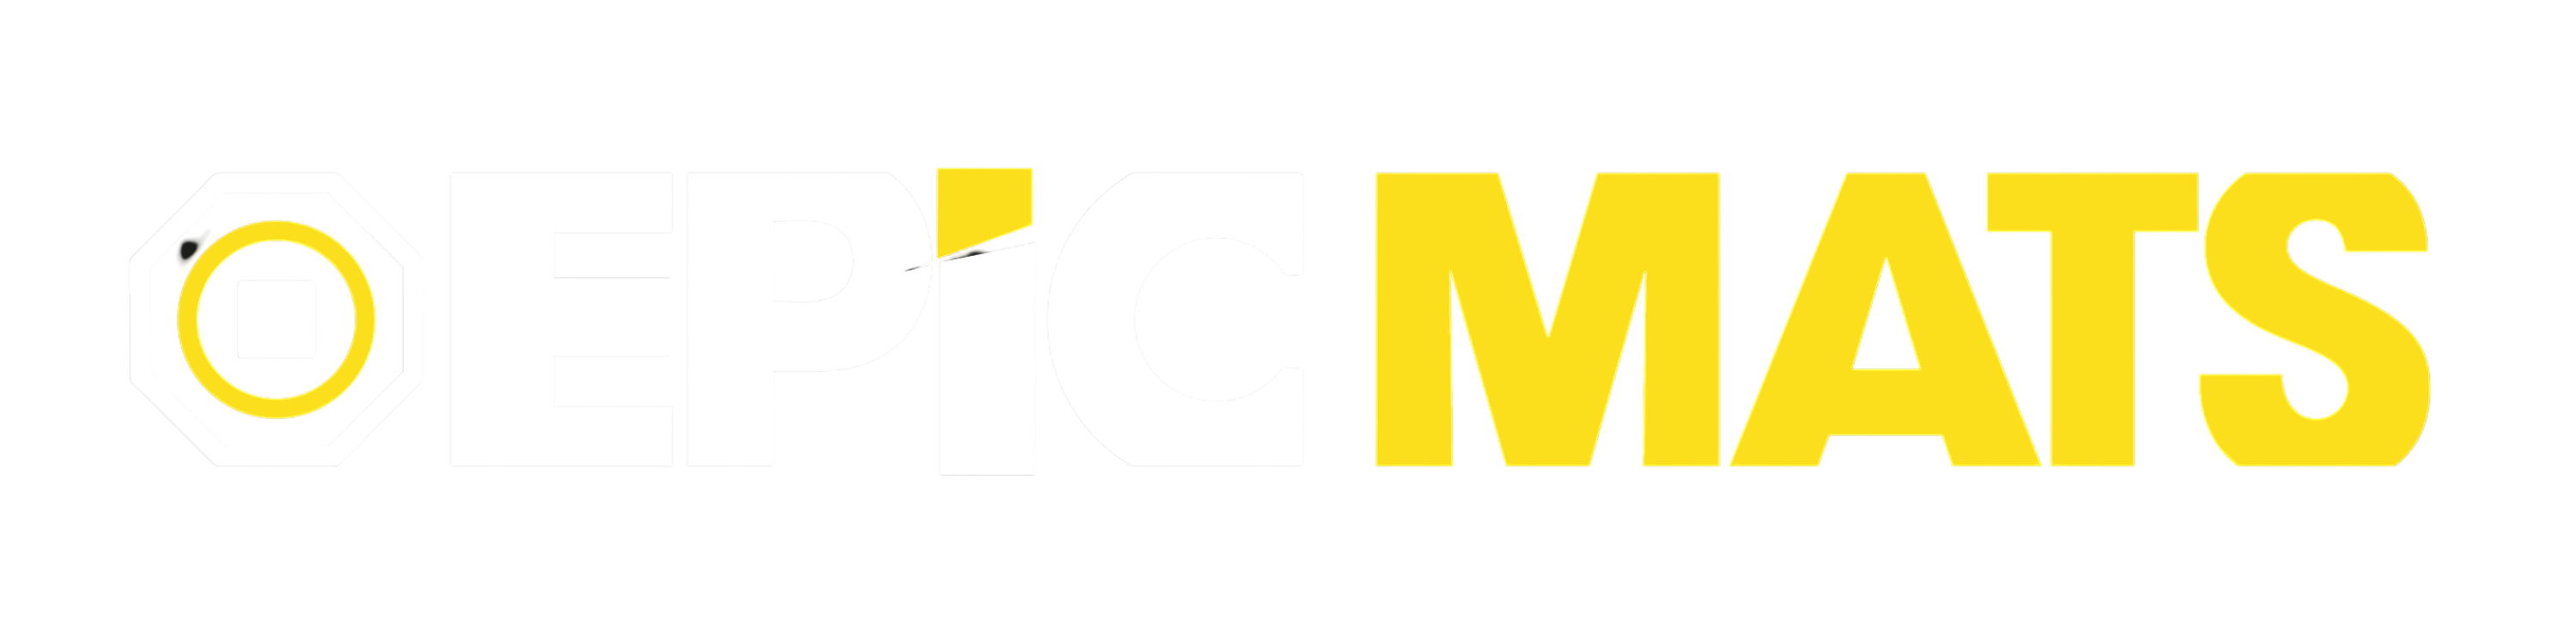 epic mats logo